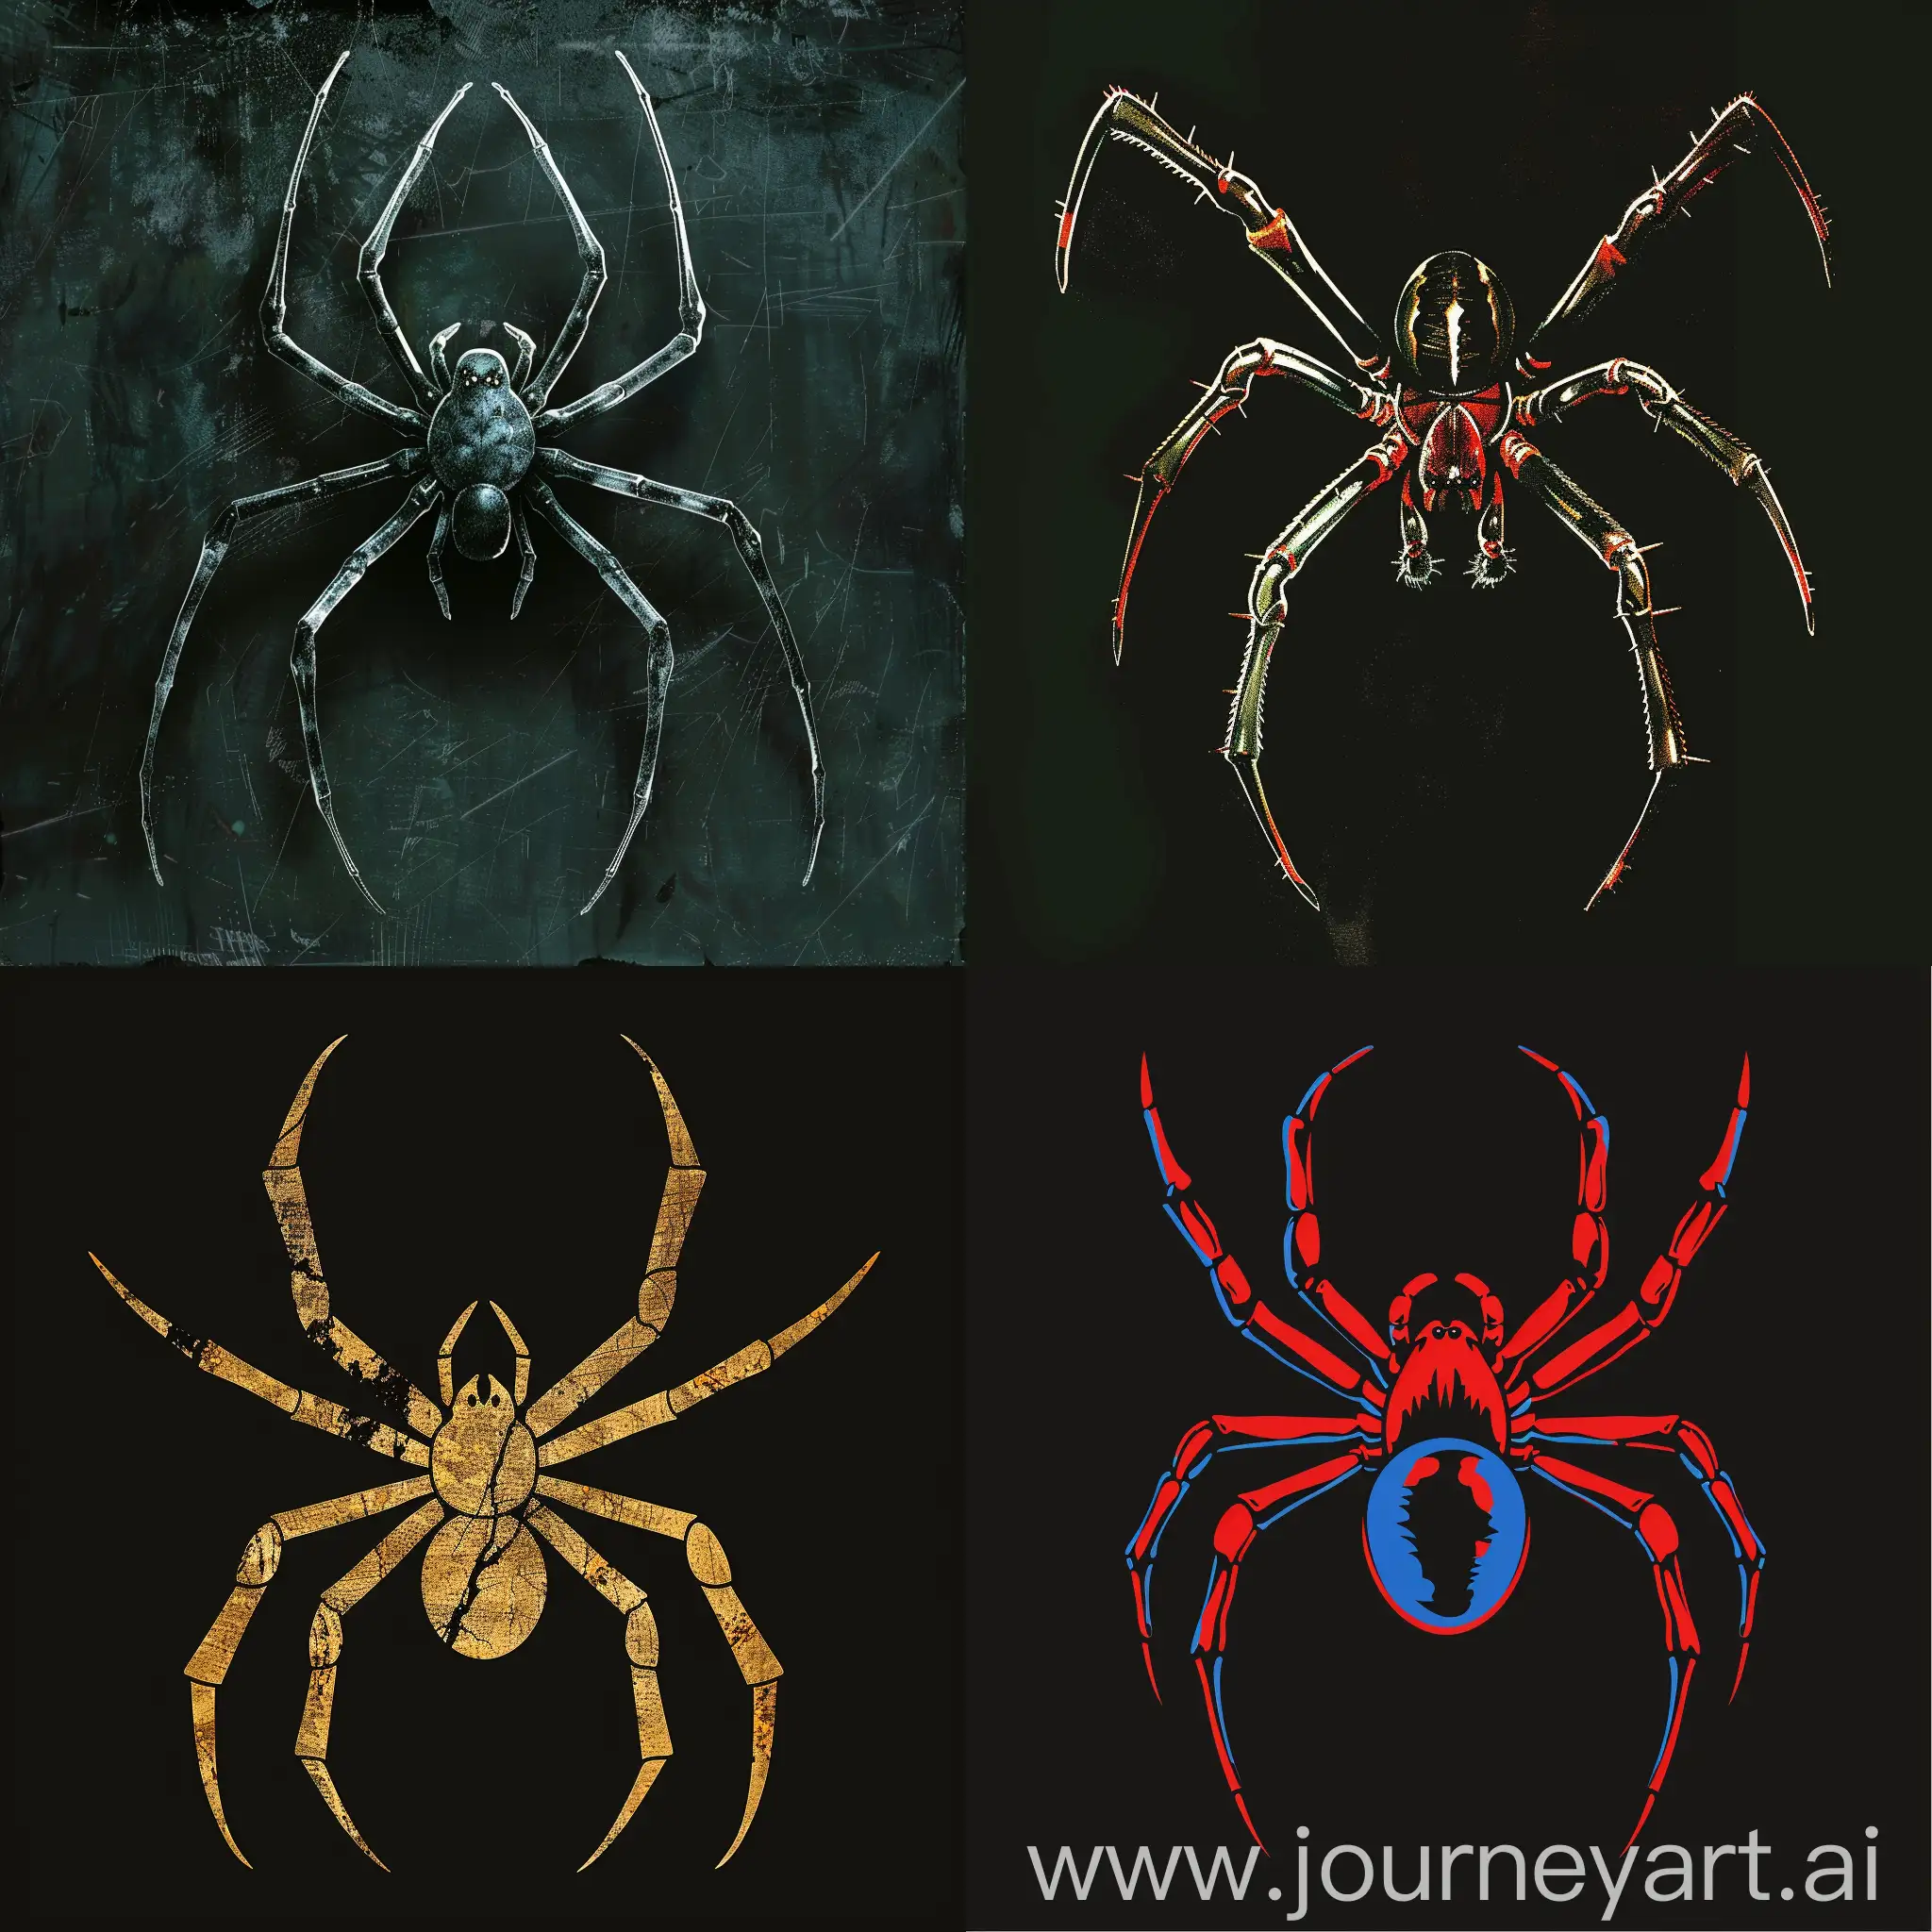 Human-Spider-Logo-Design-1994-Vintage-Version-6